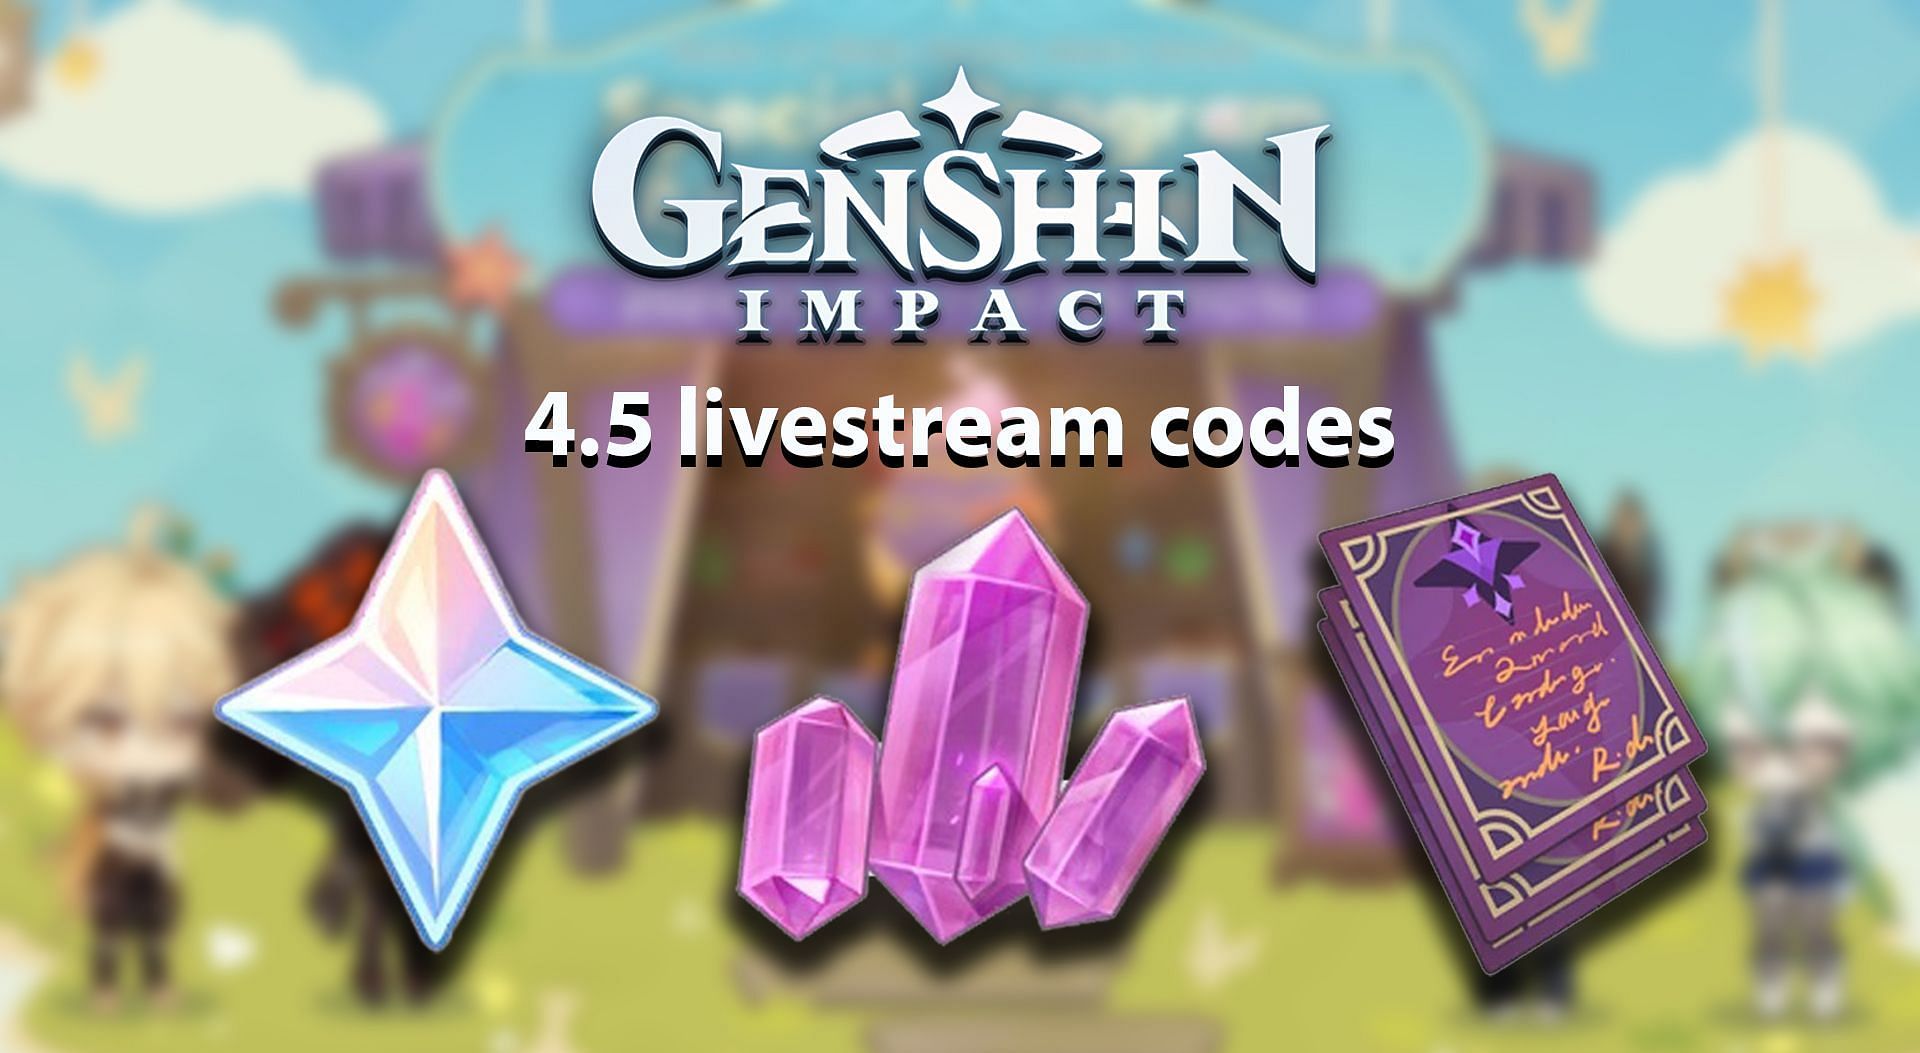 Genshin Impact 4.5 livestream codes